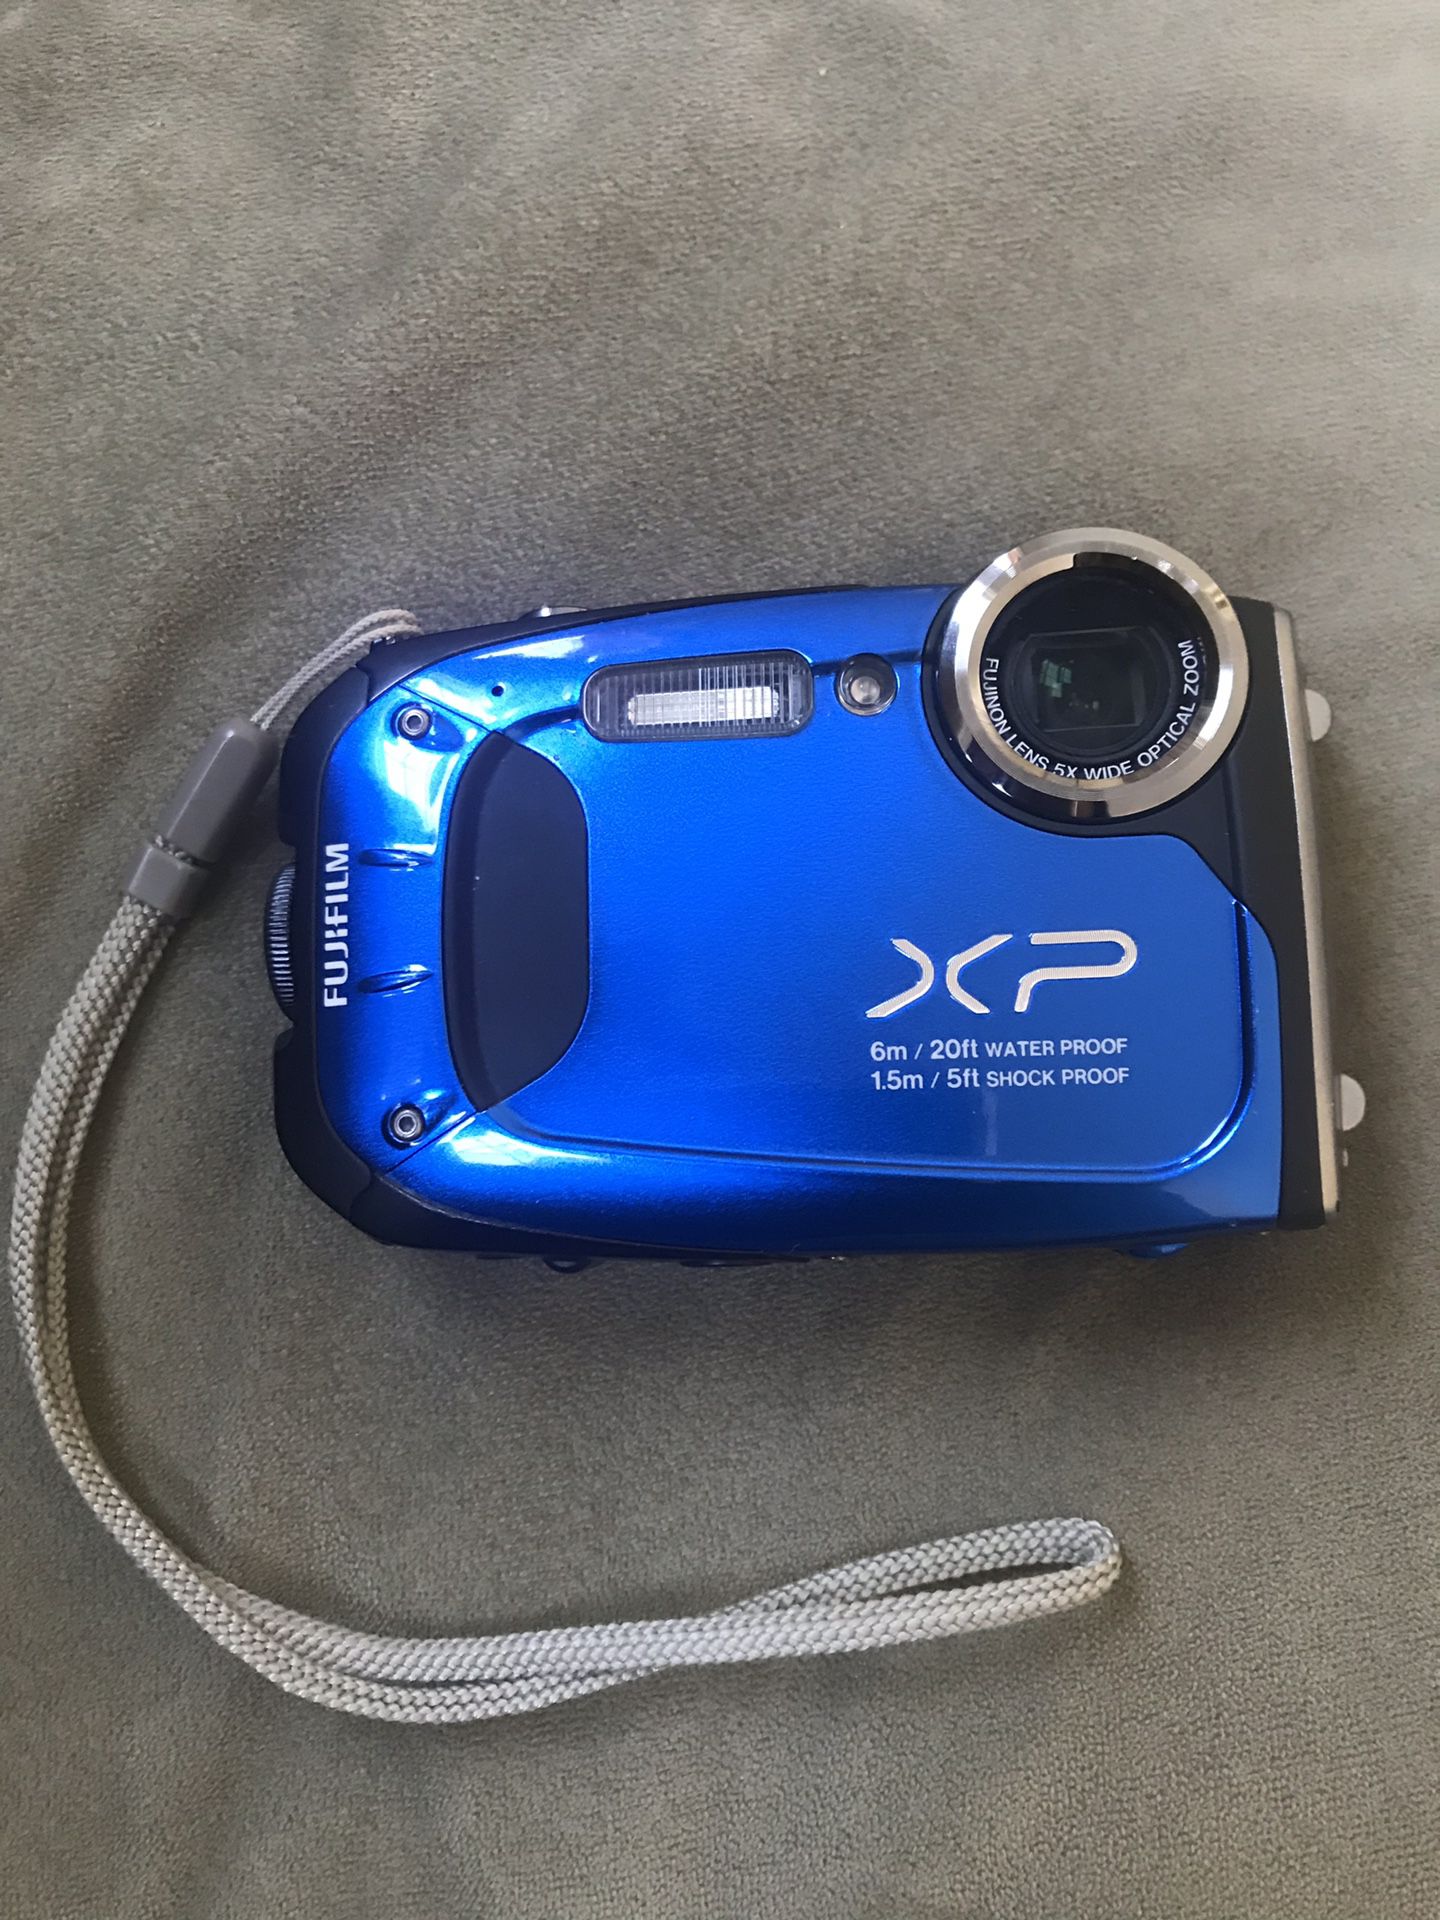 Waterproof digital camera - FujiFilm Finepix XP60